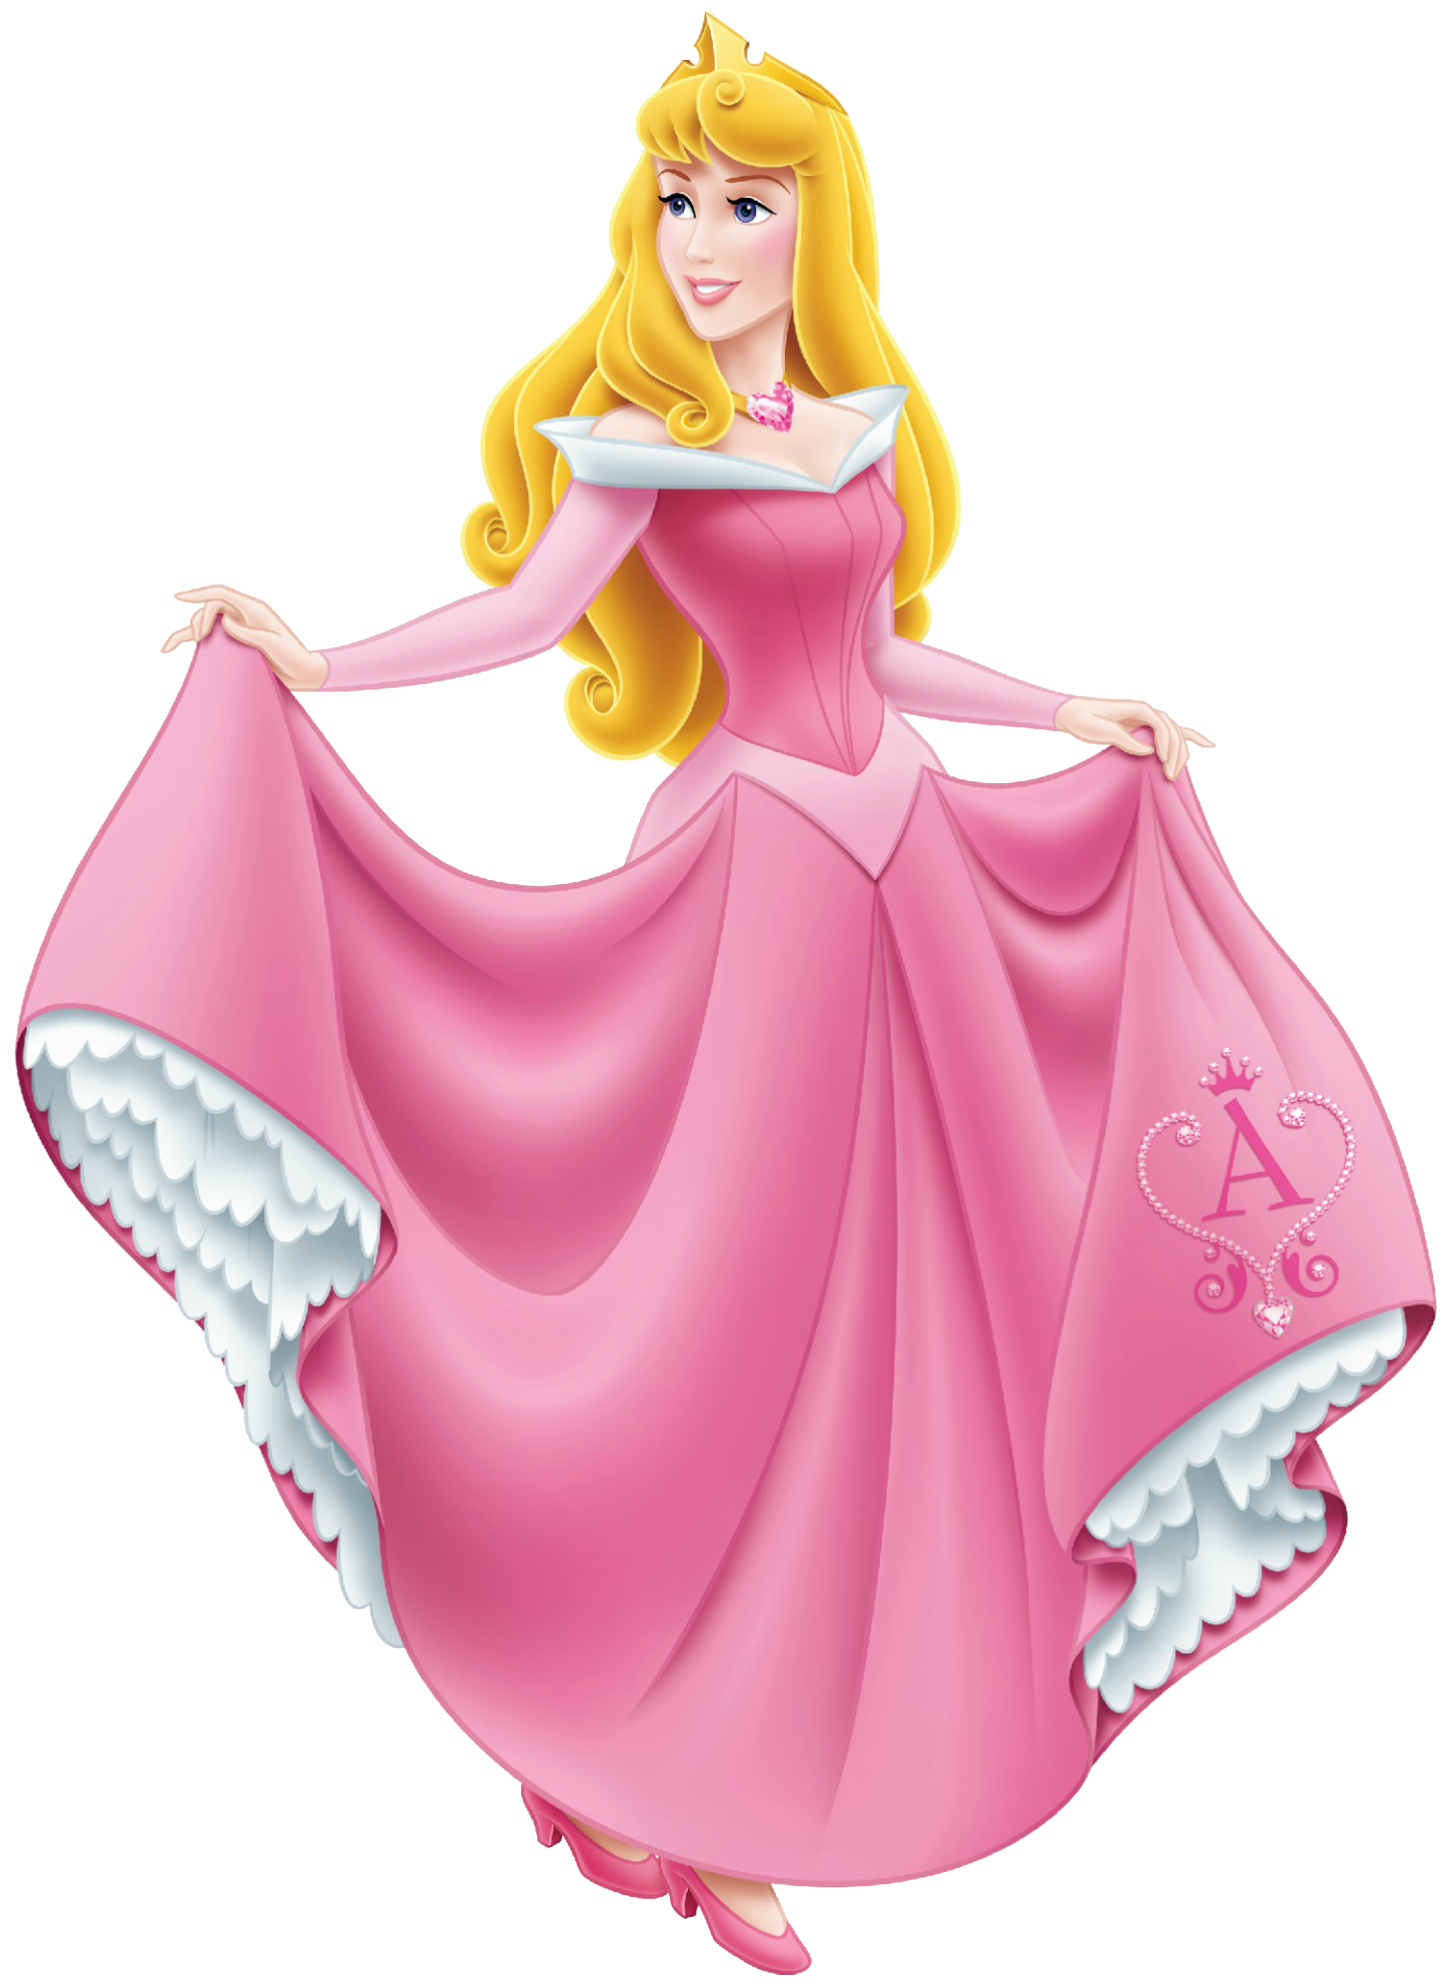 Princess Aurora PNG Background Image